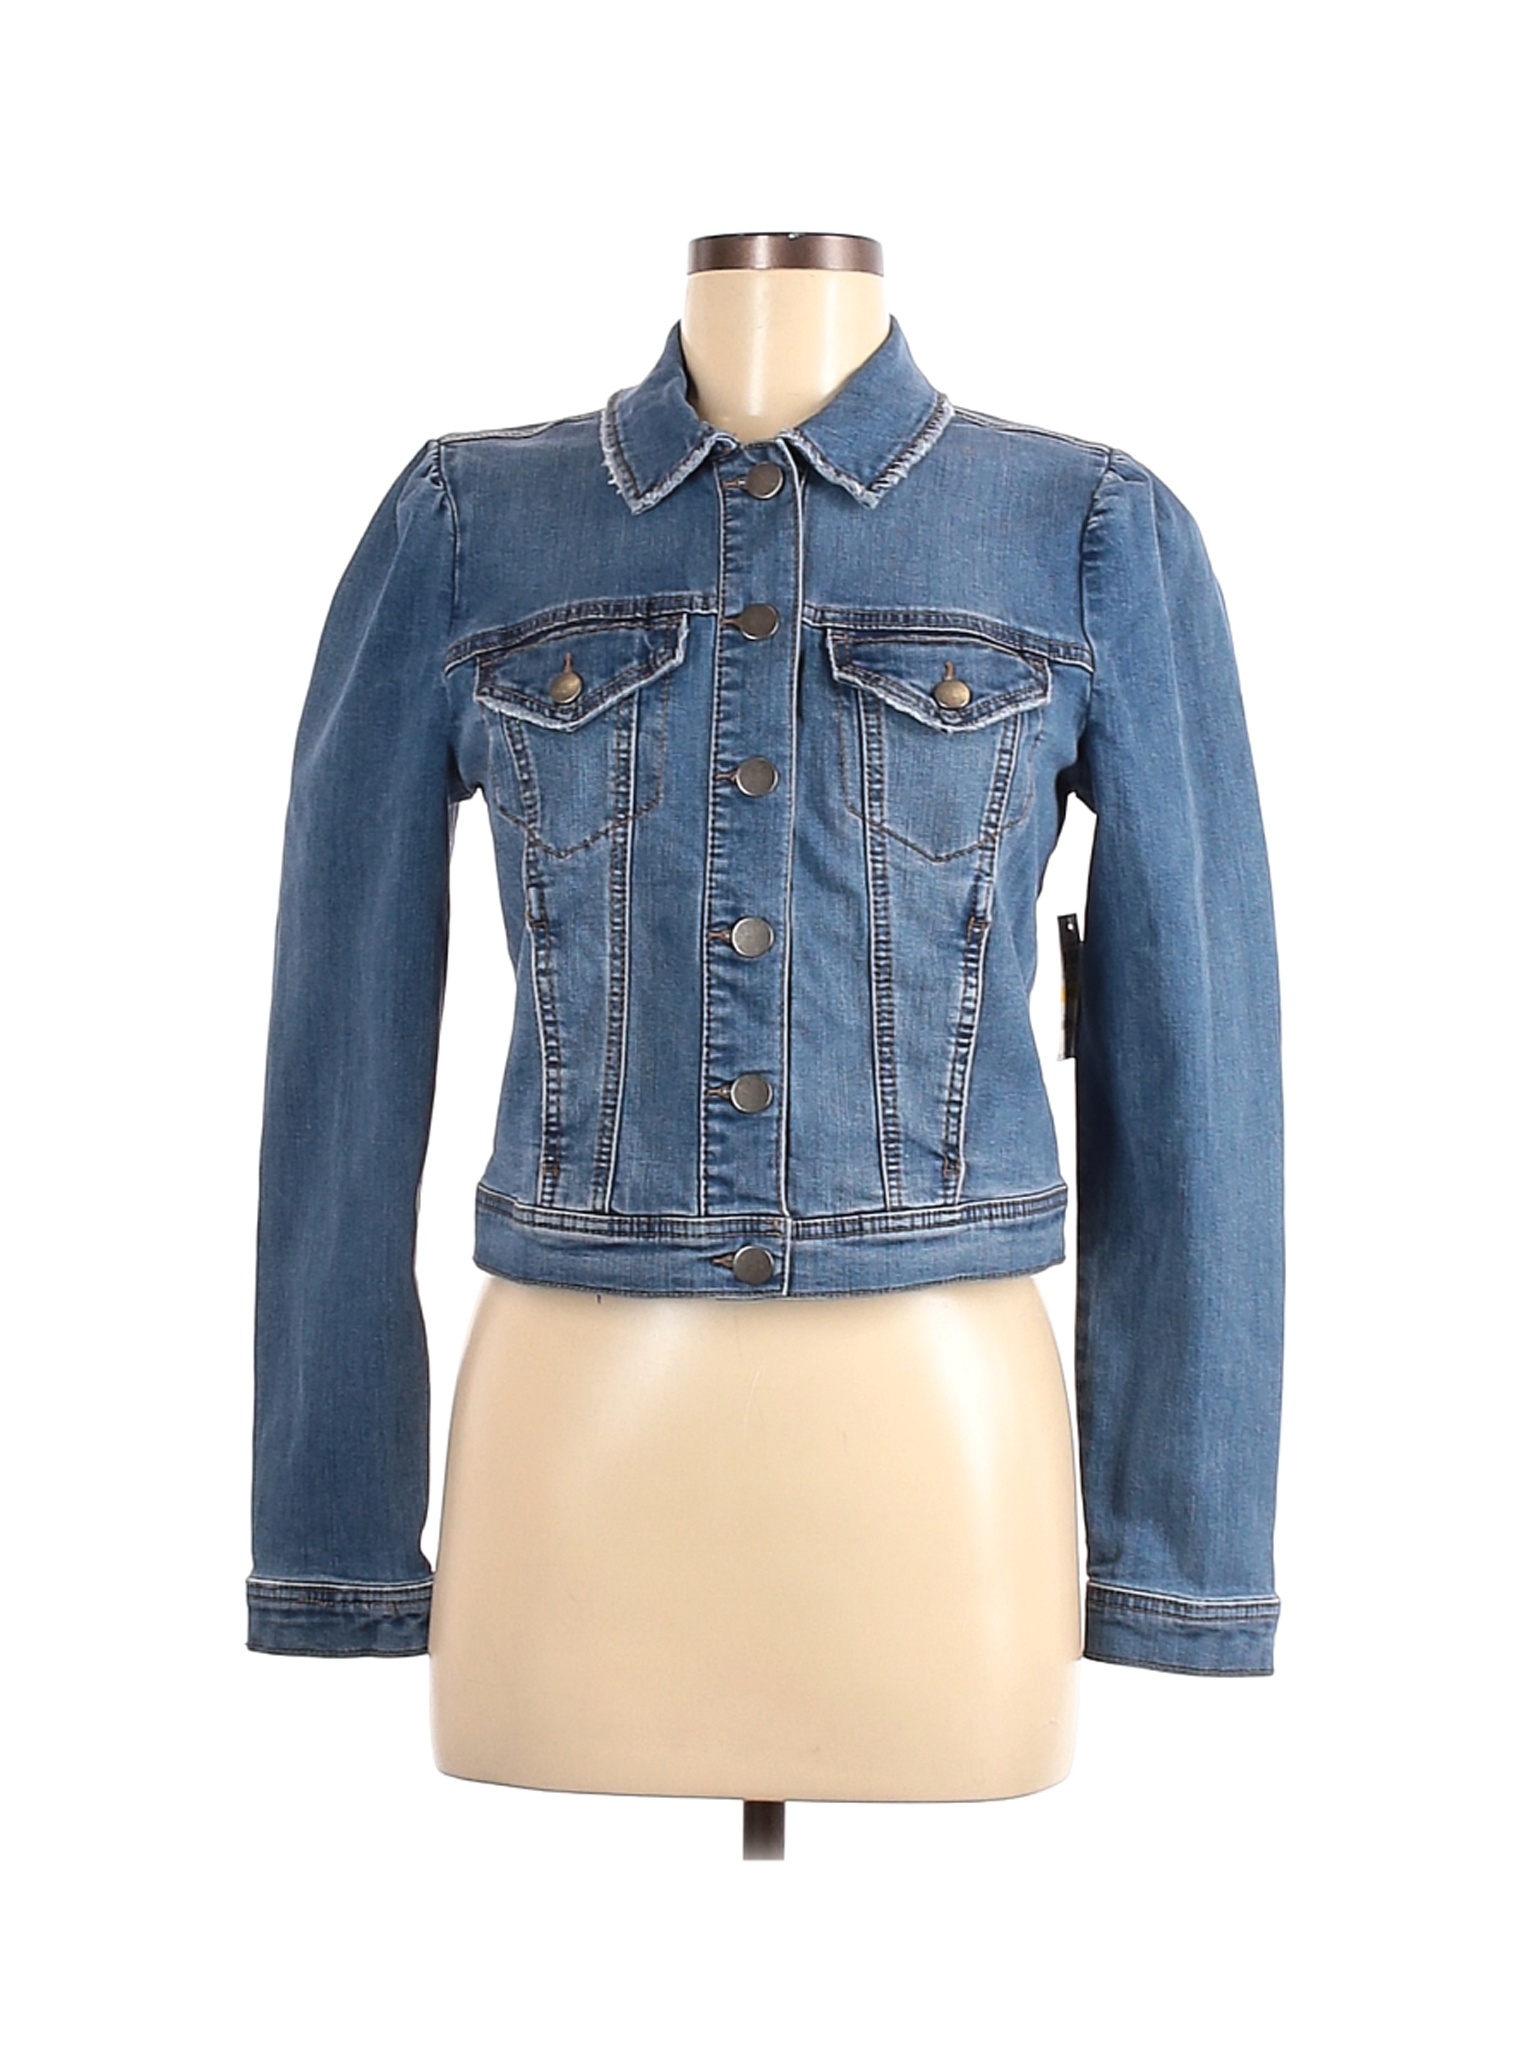 NWT Maison Jules Women Blue Denim Jacket M | eBay